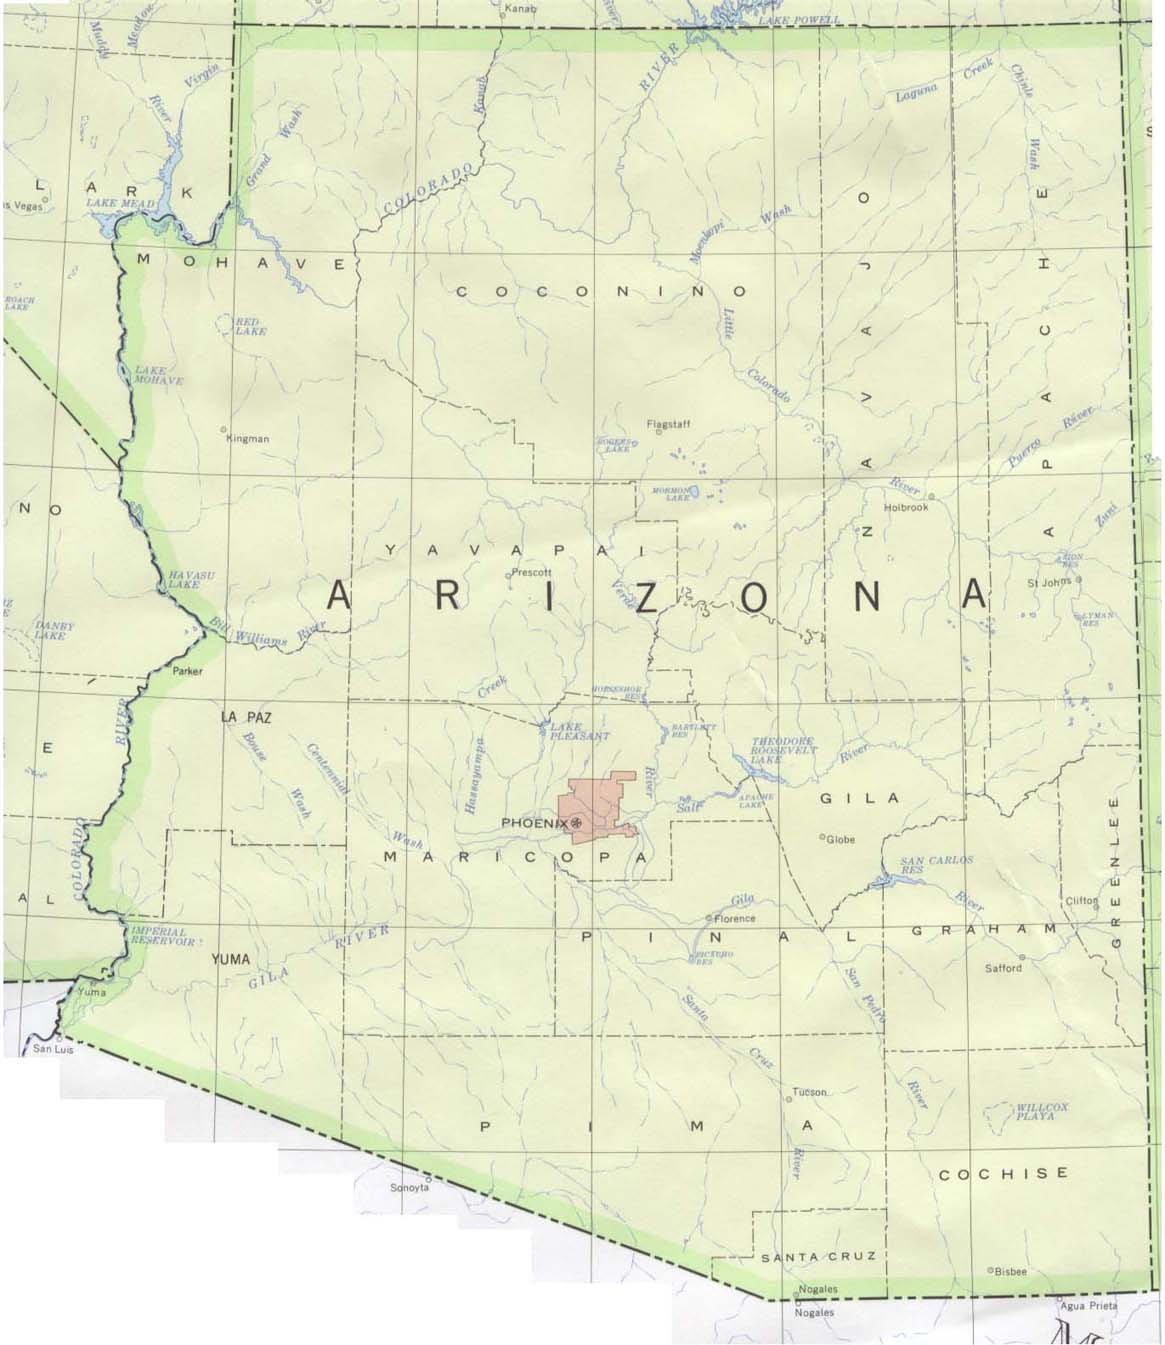  Maps of Arizona. Arizona original scale 1:2,500,000 U.S.G.S. 1972 limited update 1990 (175K) 